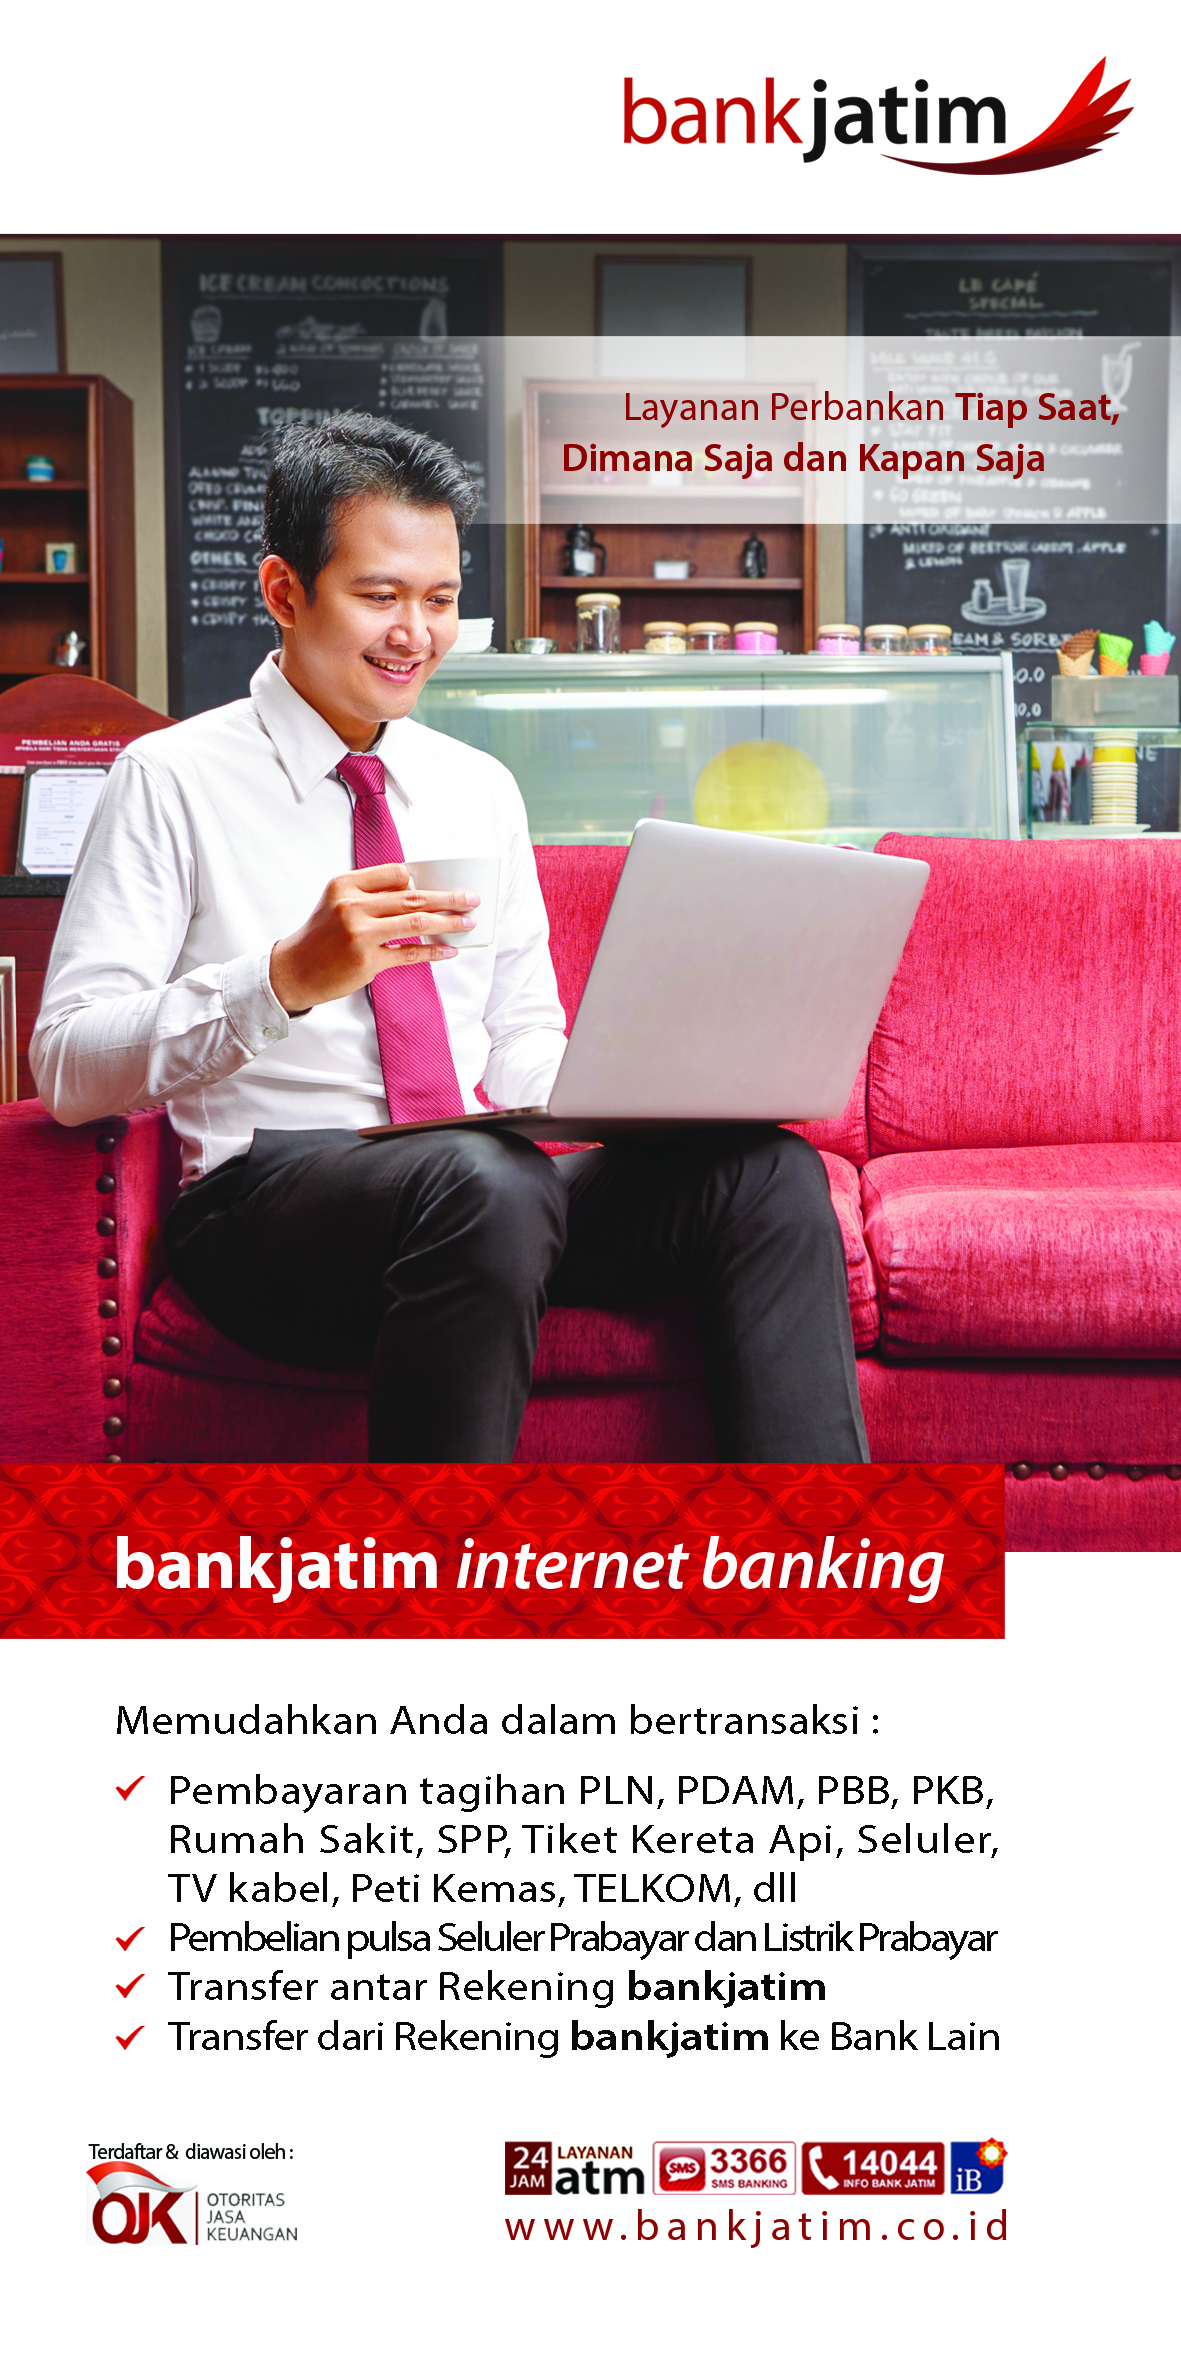 http://www.bankjatim.co.id/id/konvensional/produk-layanan/layanan/internet-banking